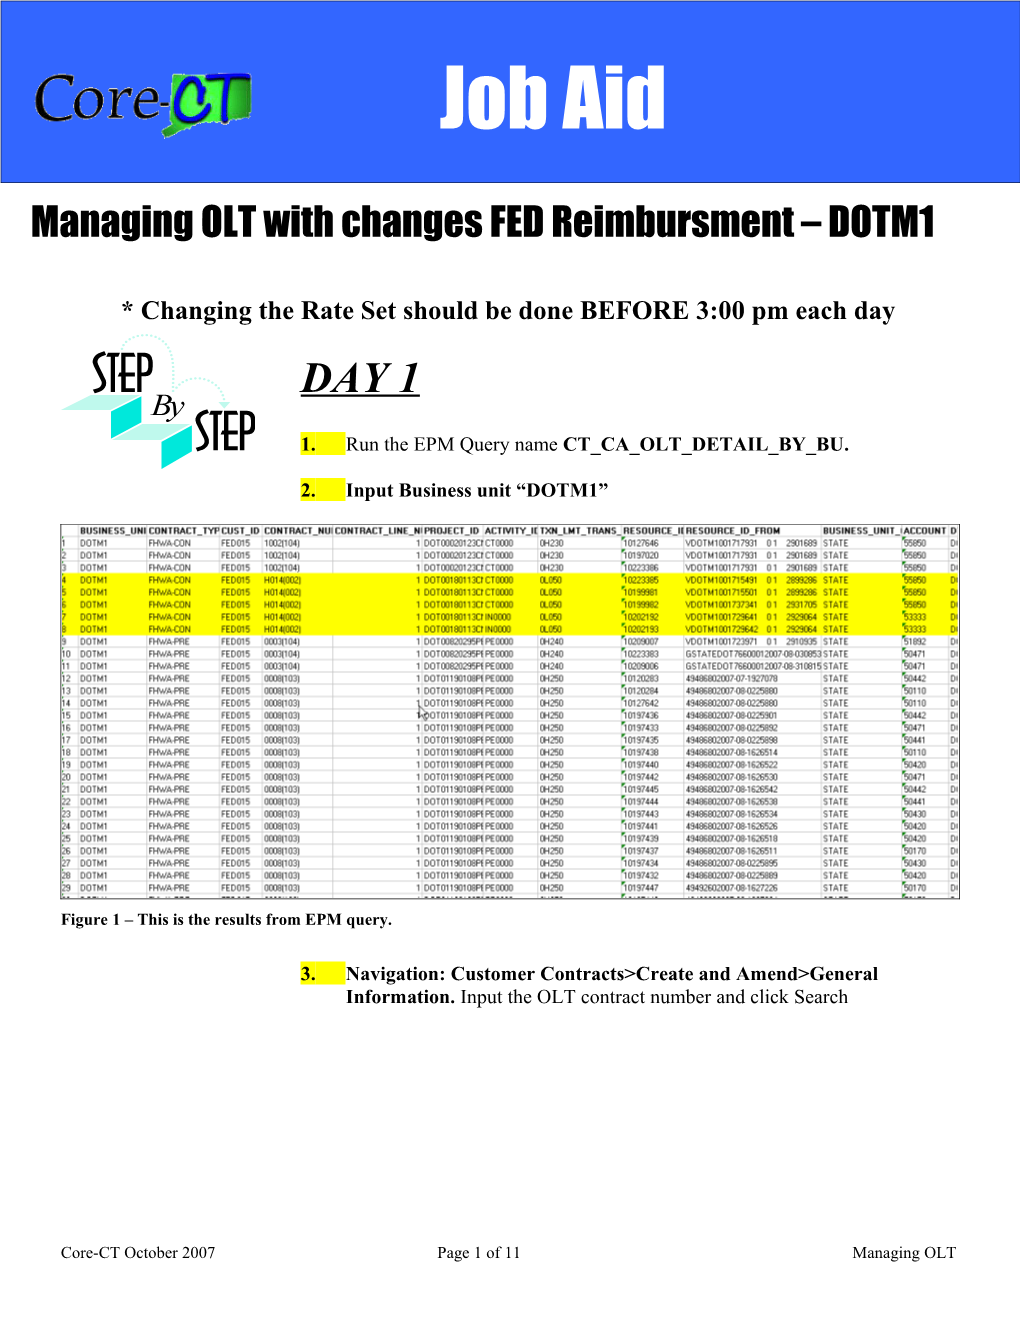 Managing OLT with Changes FED Reimbursement - DOTM1